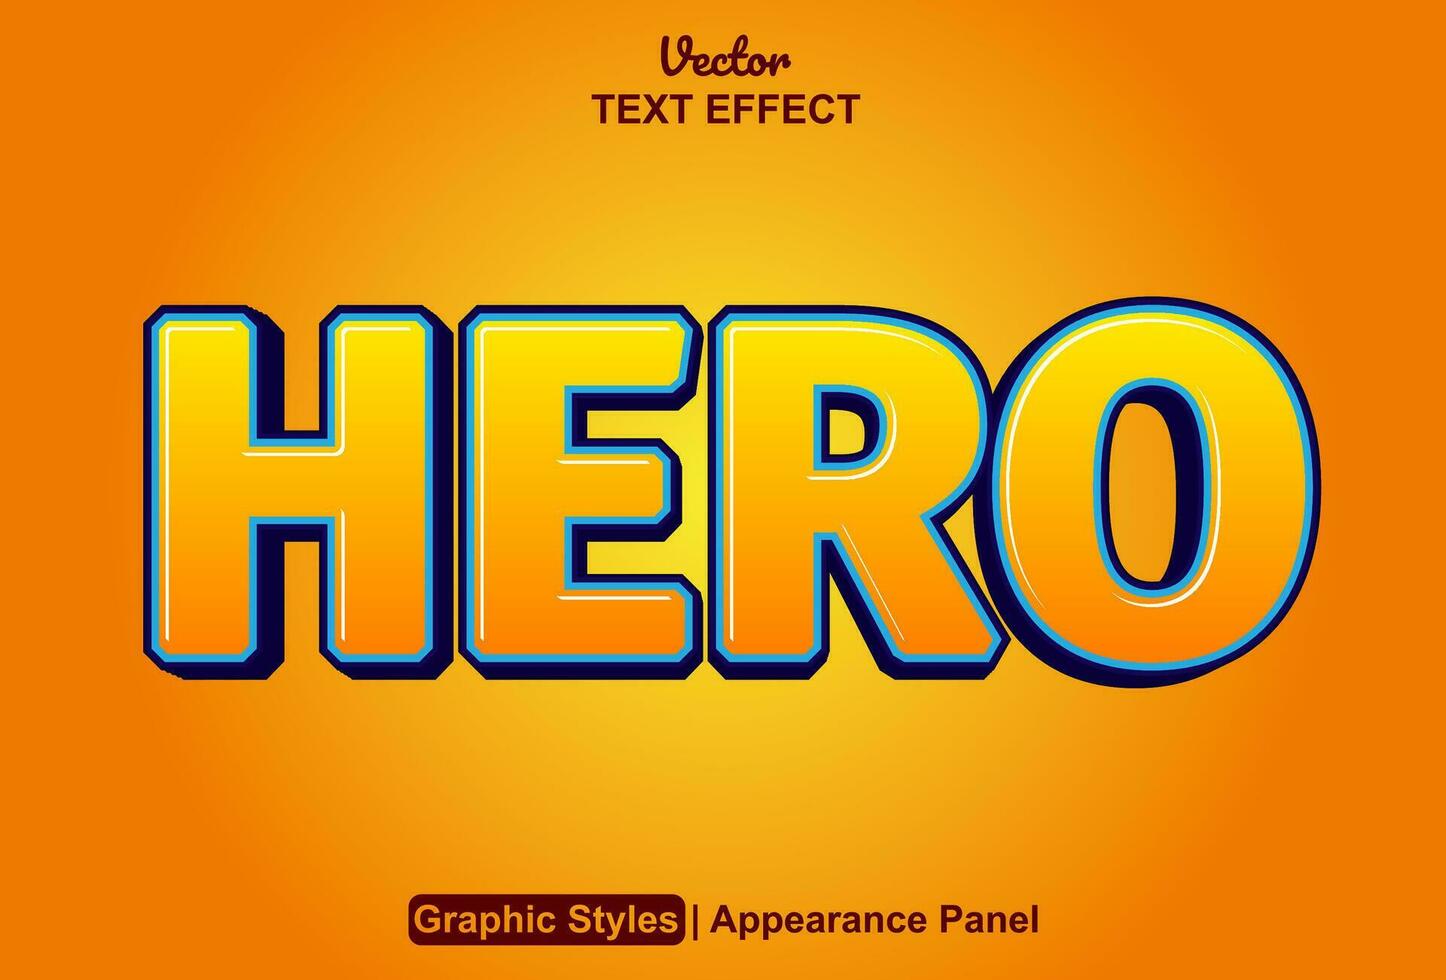 herói texto efeito com laranja gráfico estilo e editável. vetor